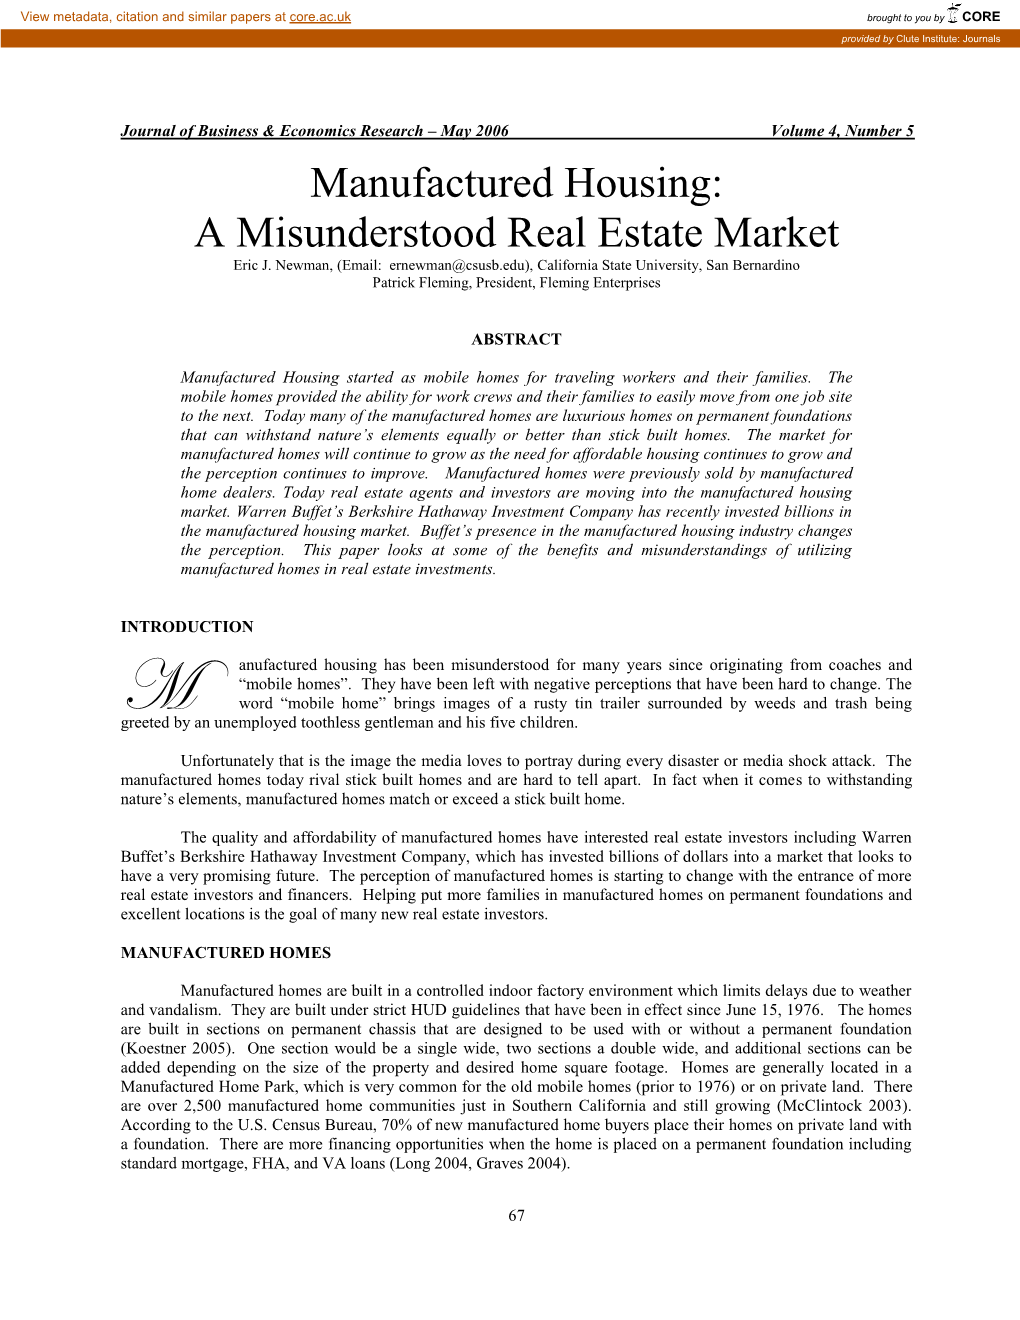 Manufactured Housing: a Misunderstood Real Estate Market Eric J